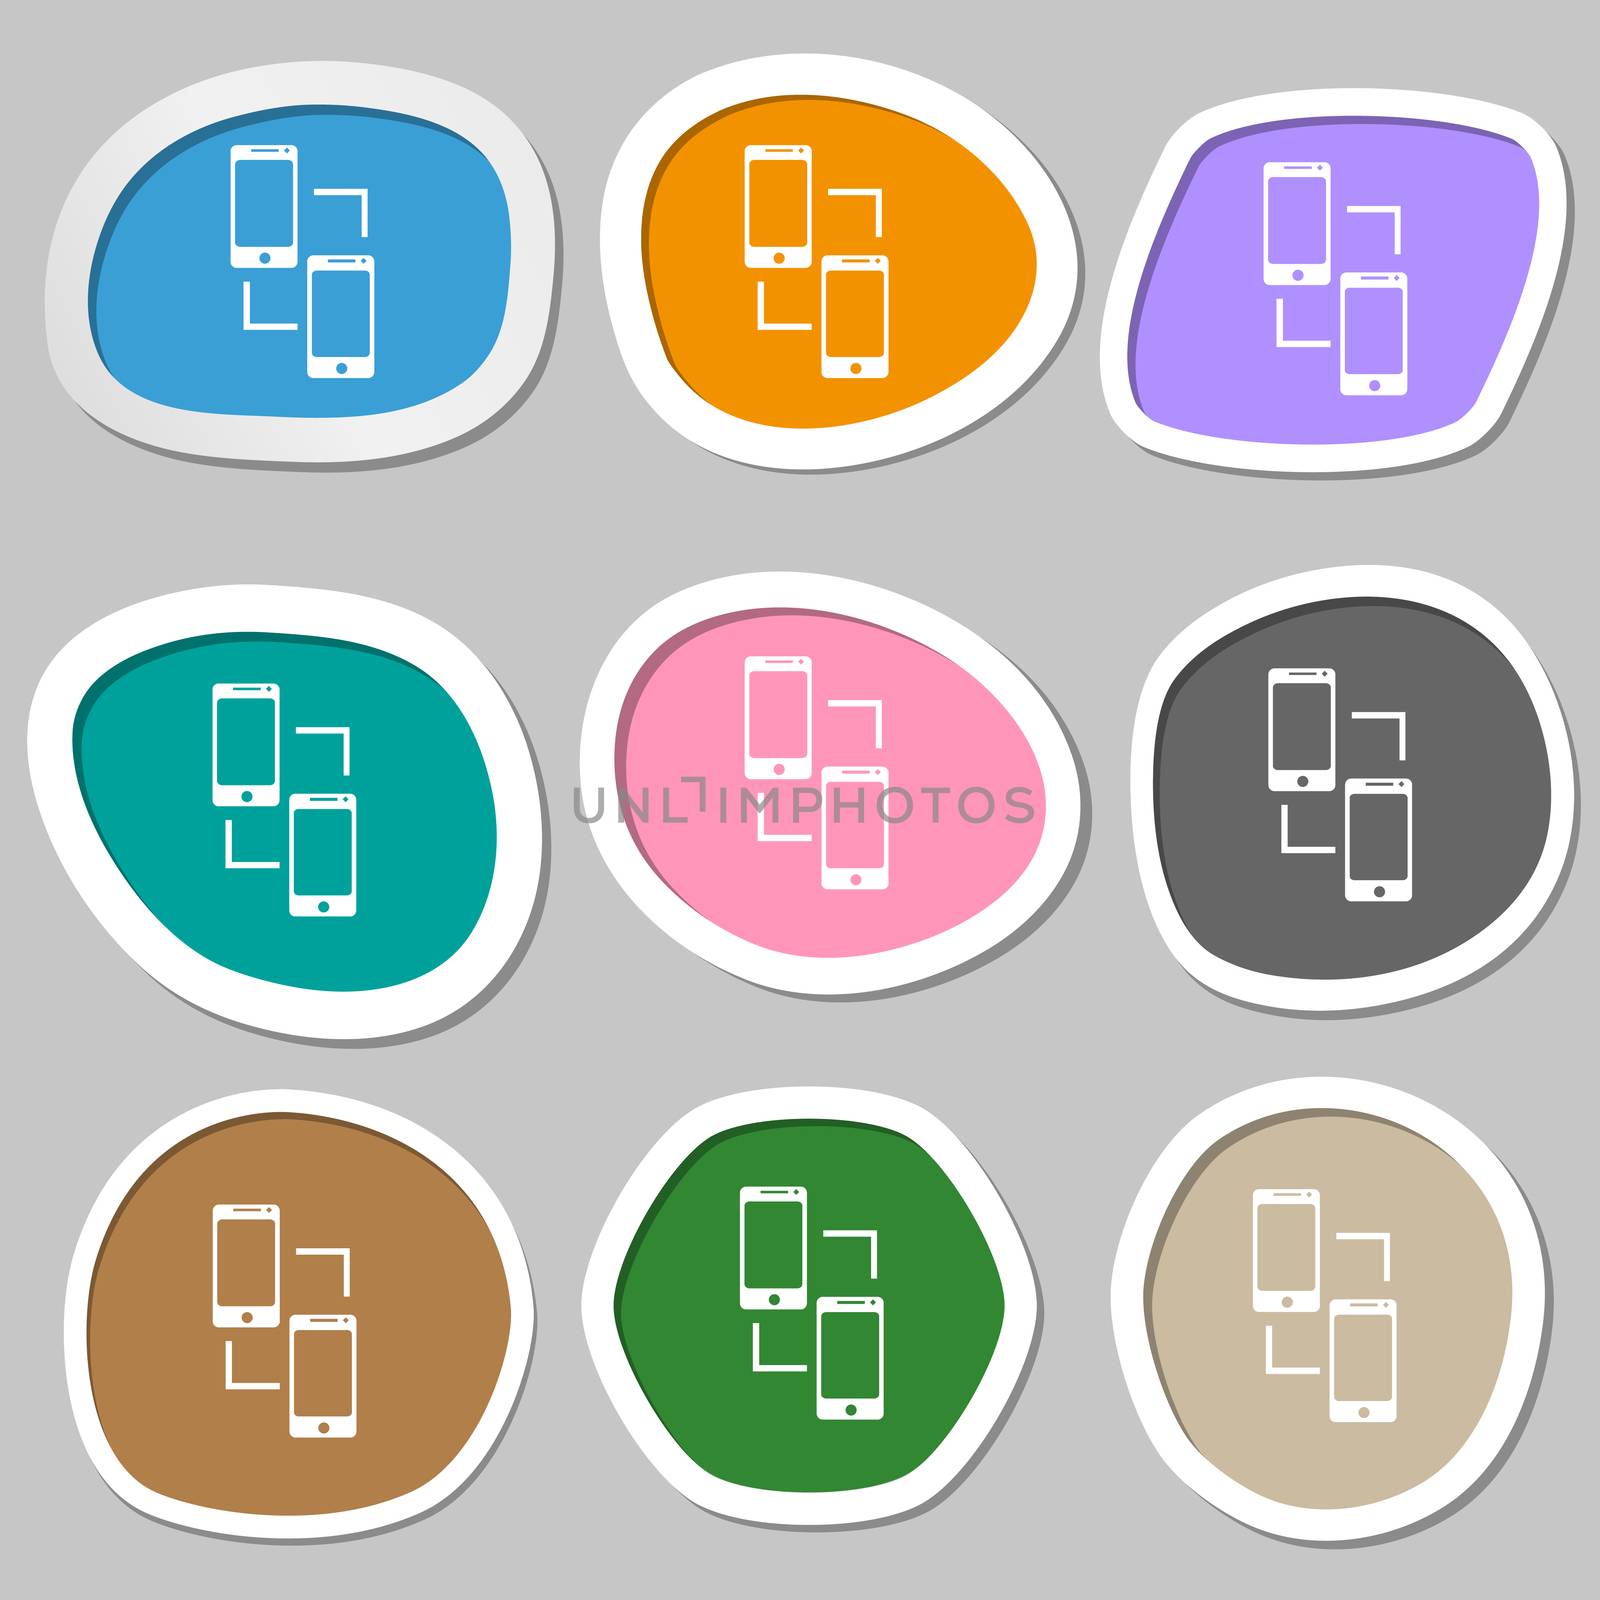 Synchronization sign icon. communicators sync symbol. Data exchange. Multicolored paper stickers. illustration